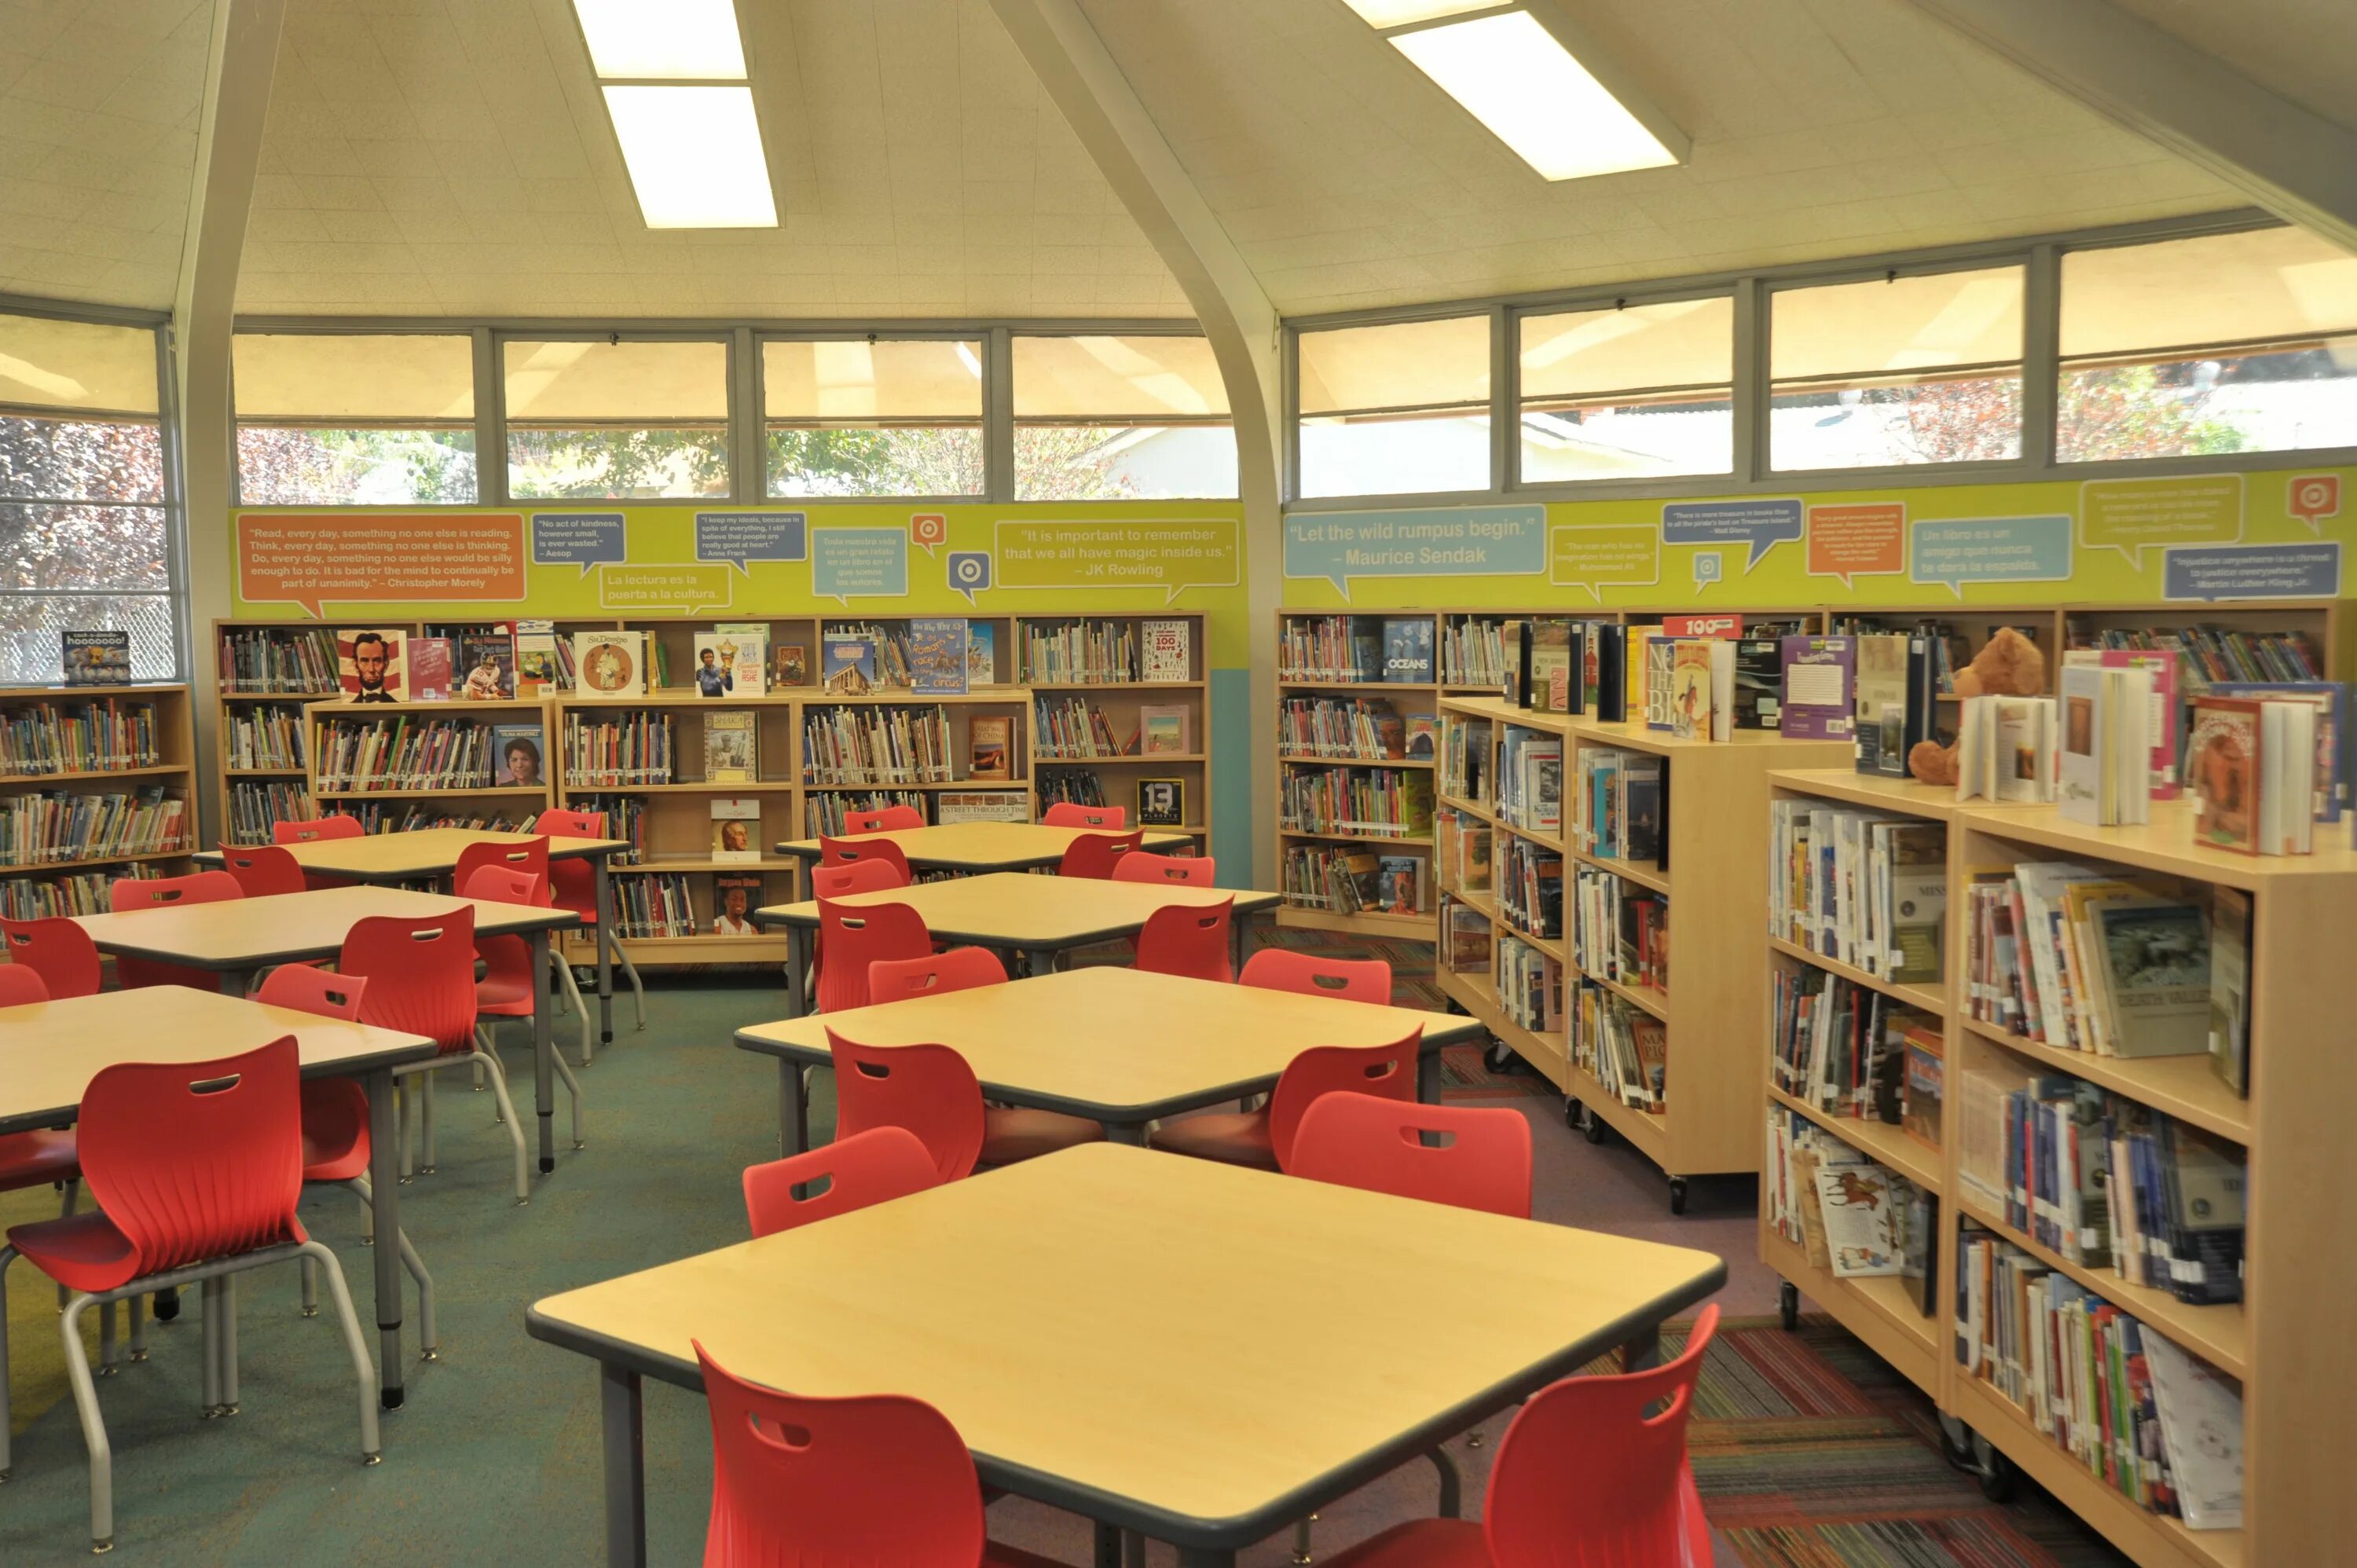 School library. Американская школа библиотека. Гугл библиотека. Elementary School Library. Хошимин библиотека школы.